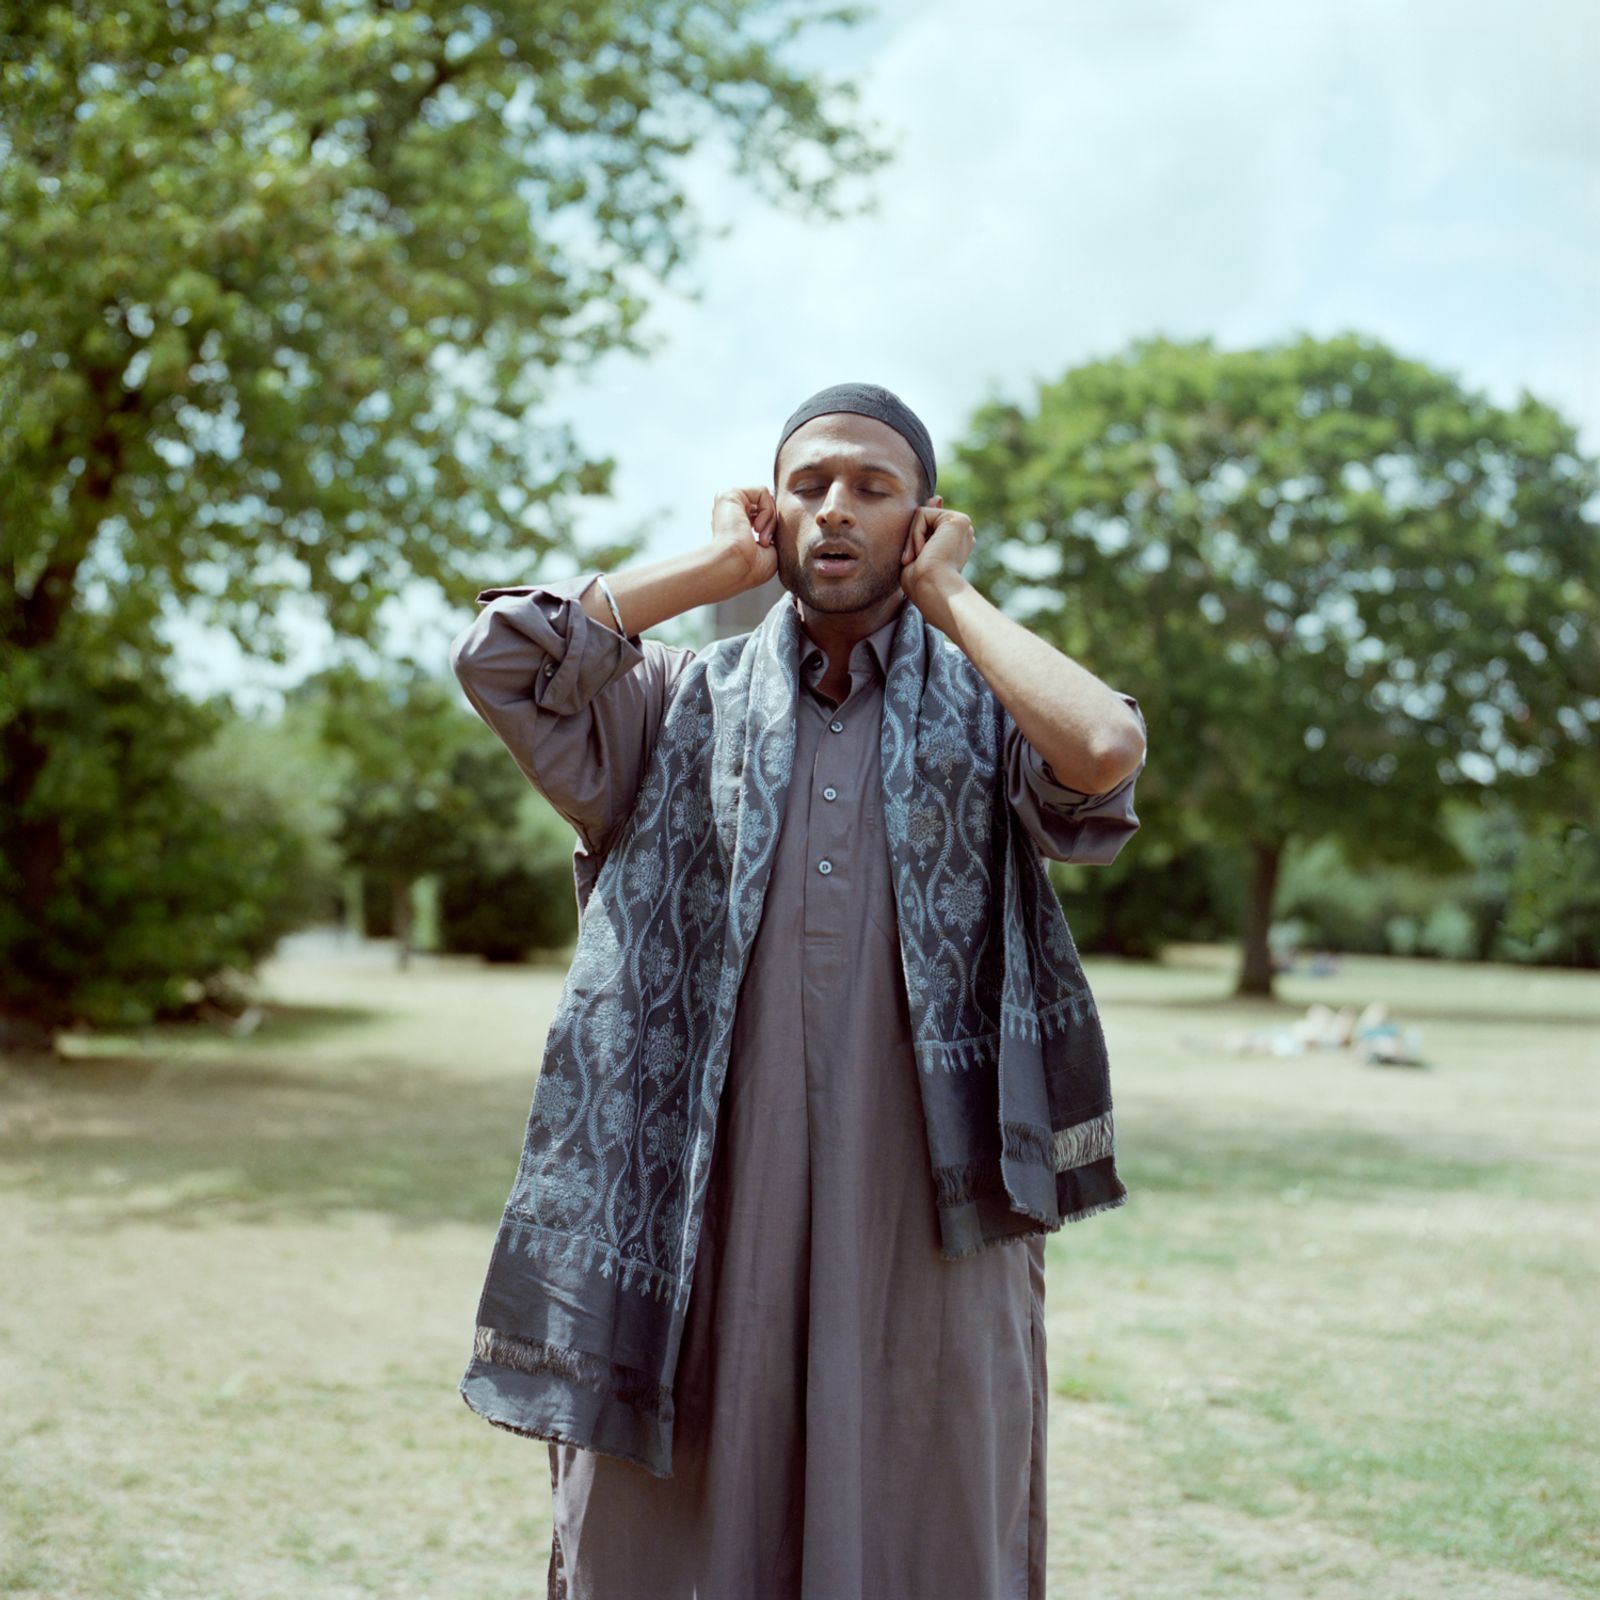 © Lia  Darjes - Calling for an inclusive eid-prayer in a public park in London.